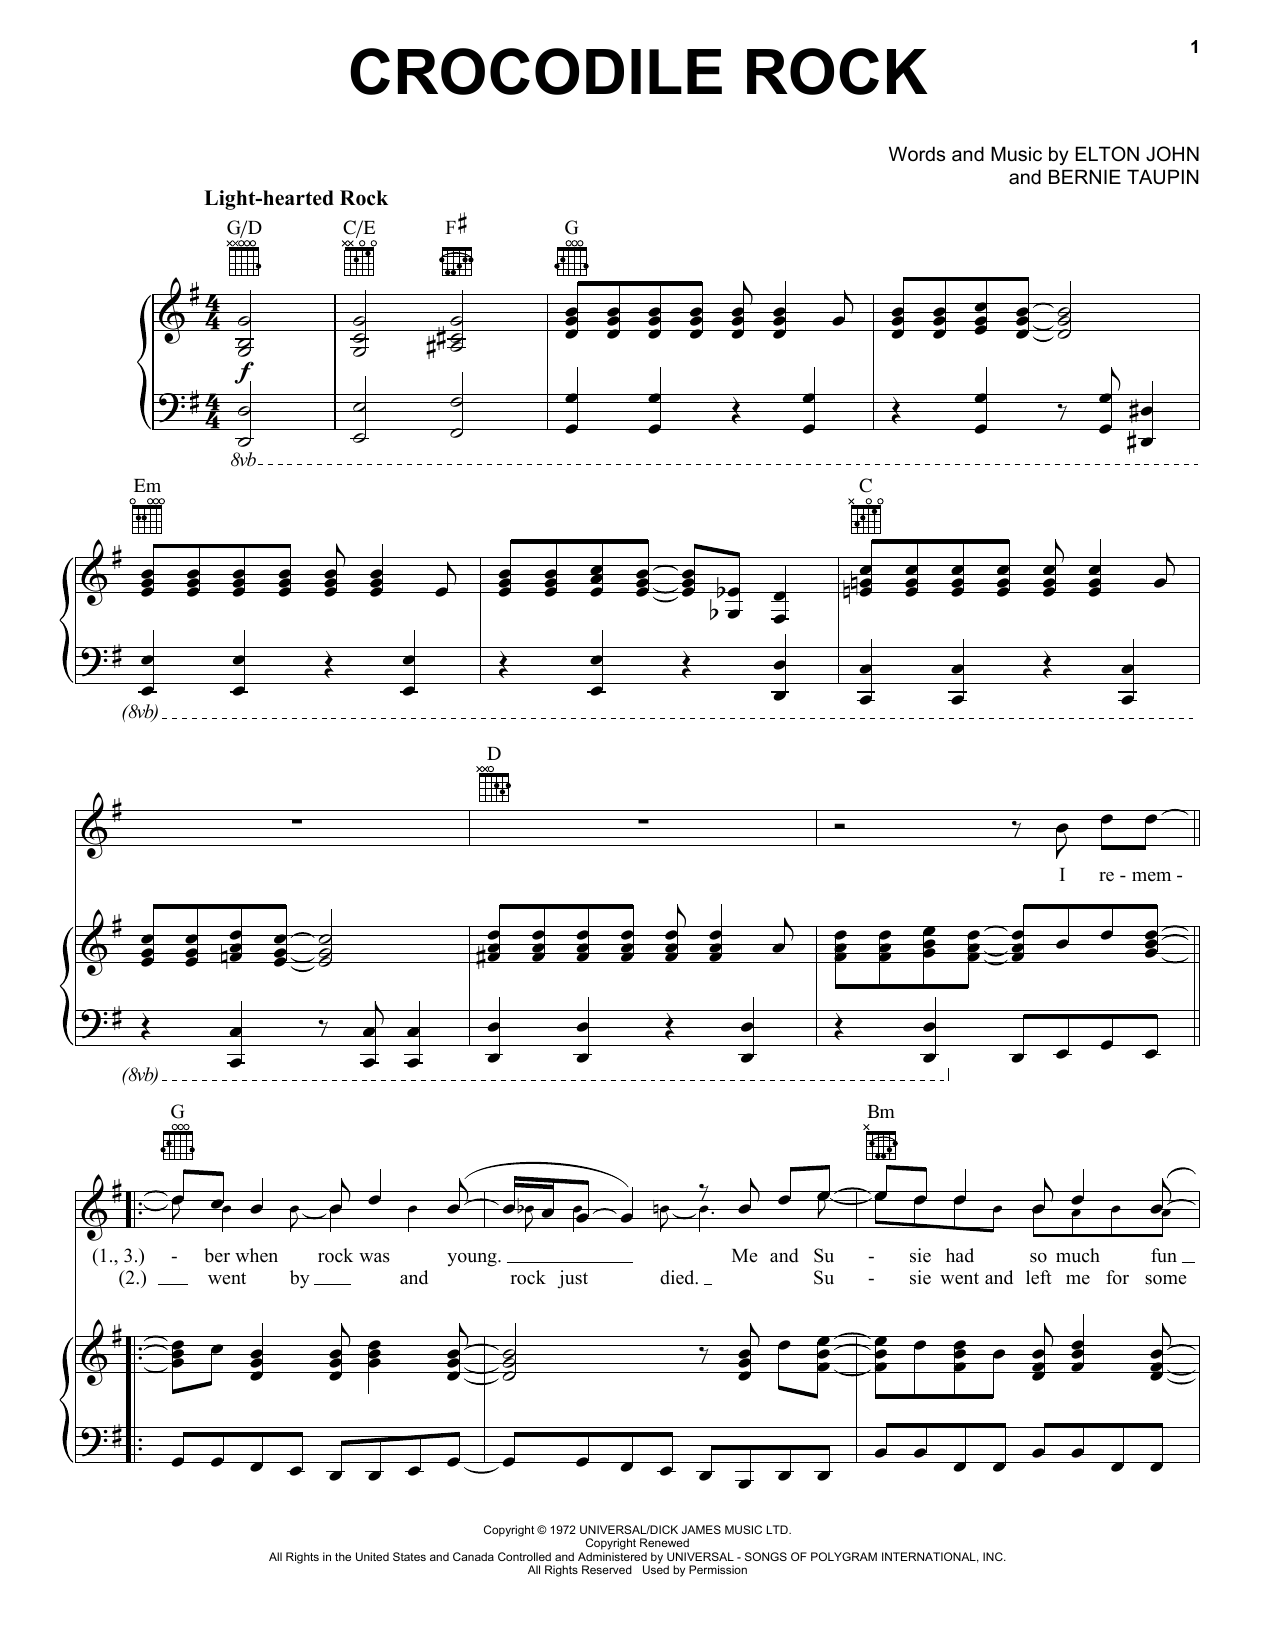 Elton John Crocodile Rock Sheet Music Notes & Chords for Melody Line, Lyrics & Chords - Download or Print PDF